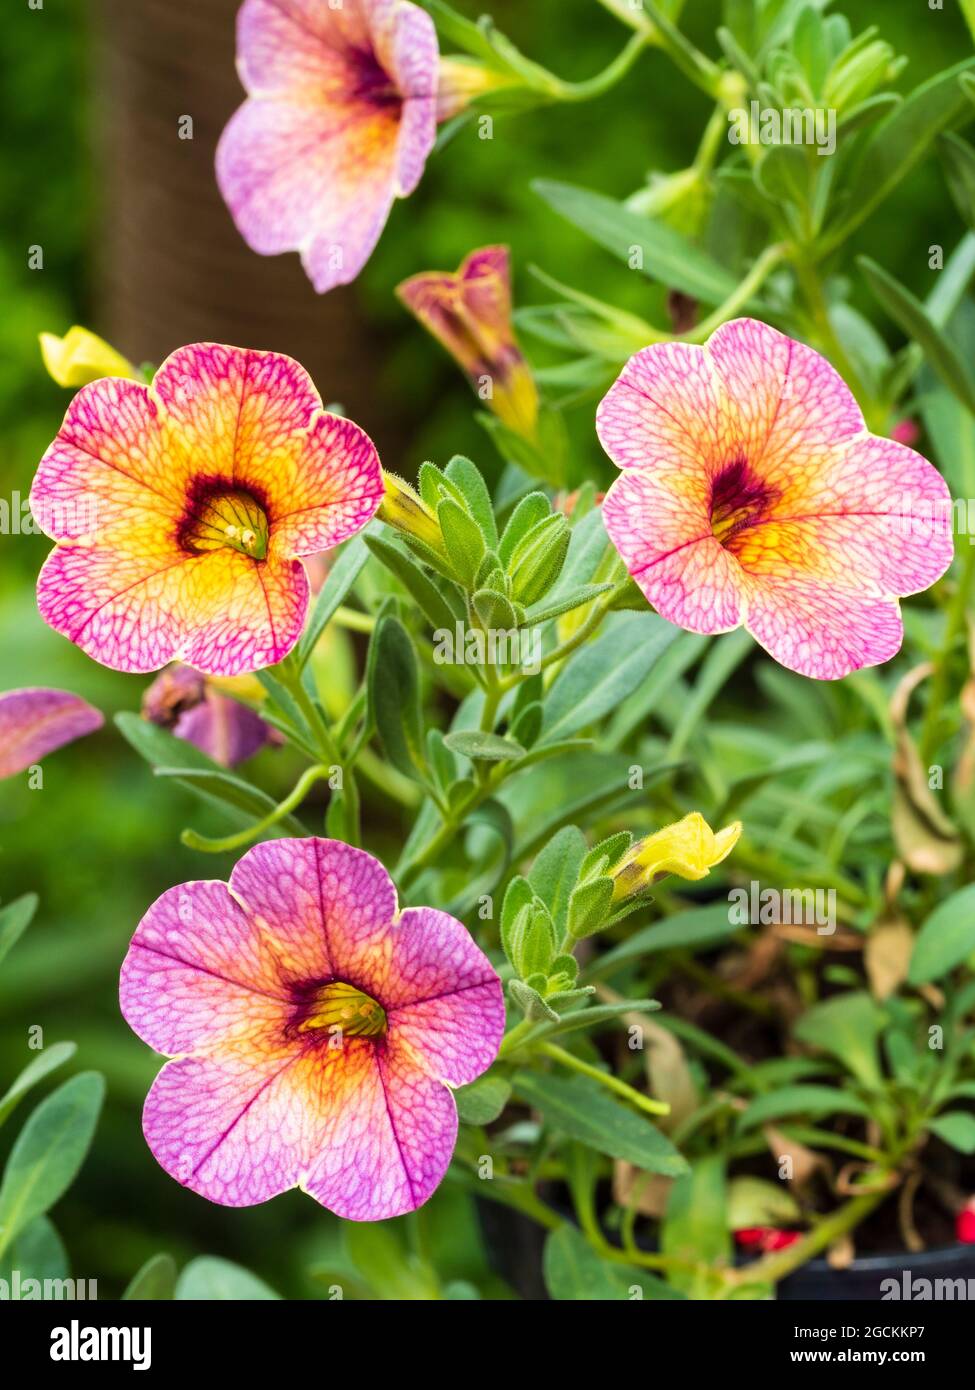 Pink and orange summer flowers of the tender hanging basket plant, Calibrachoa Chameleon 'Blueberry Scone' Stock Photo